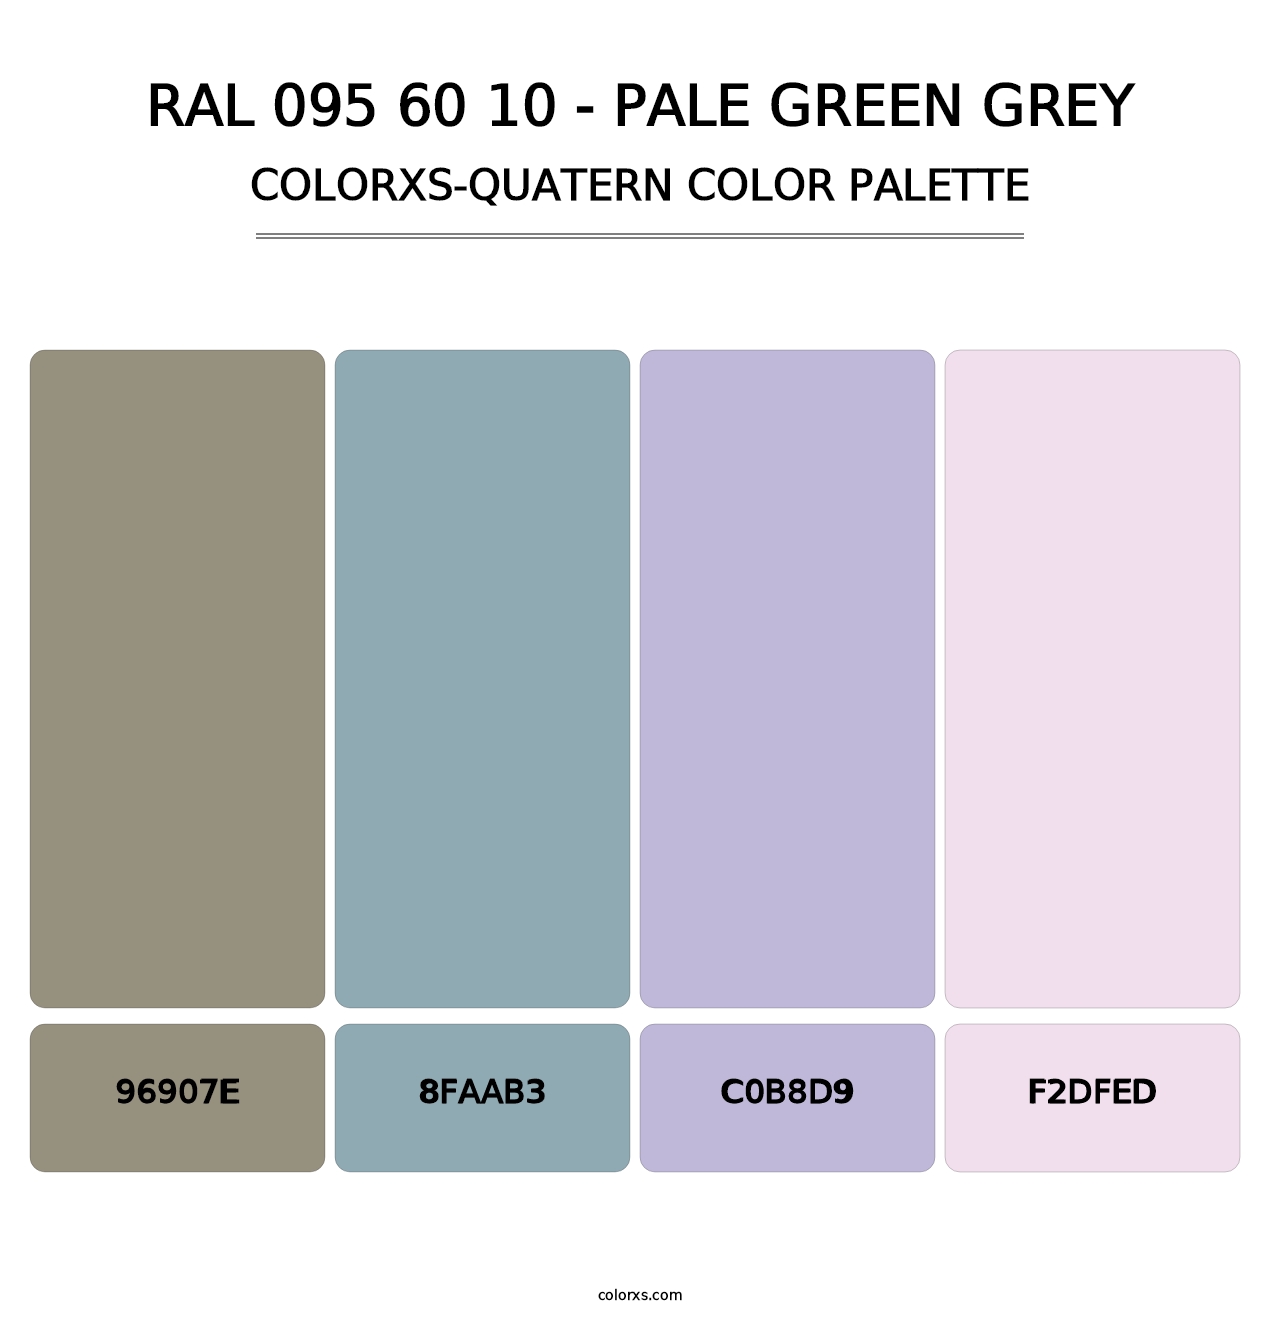 RAL 095 60 10 - Pale Green Grey - Colorxs Quatern Palette